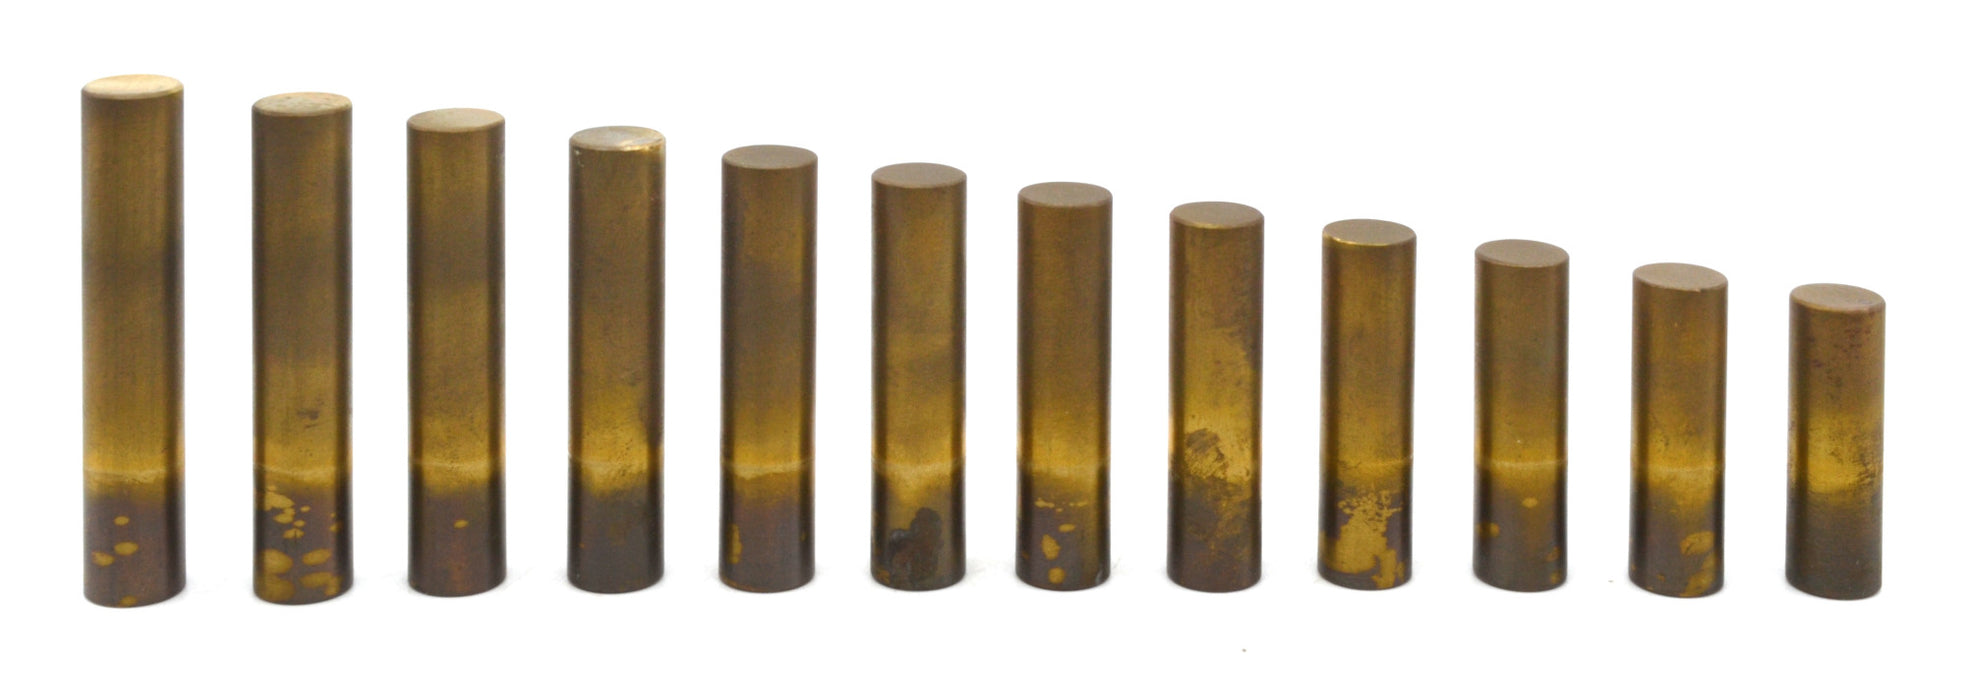 12 Piece Cylindrical Bars Density Set - Brass